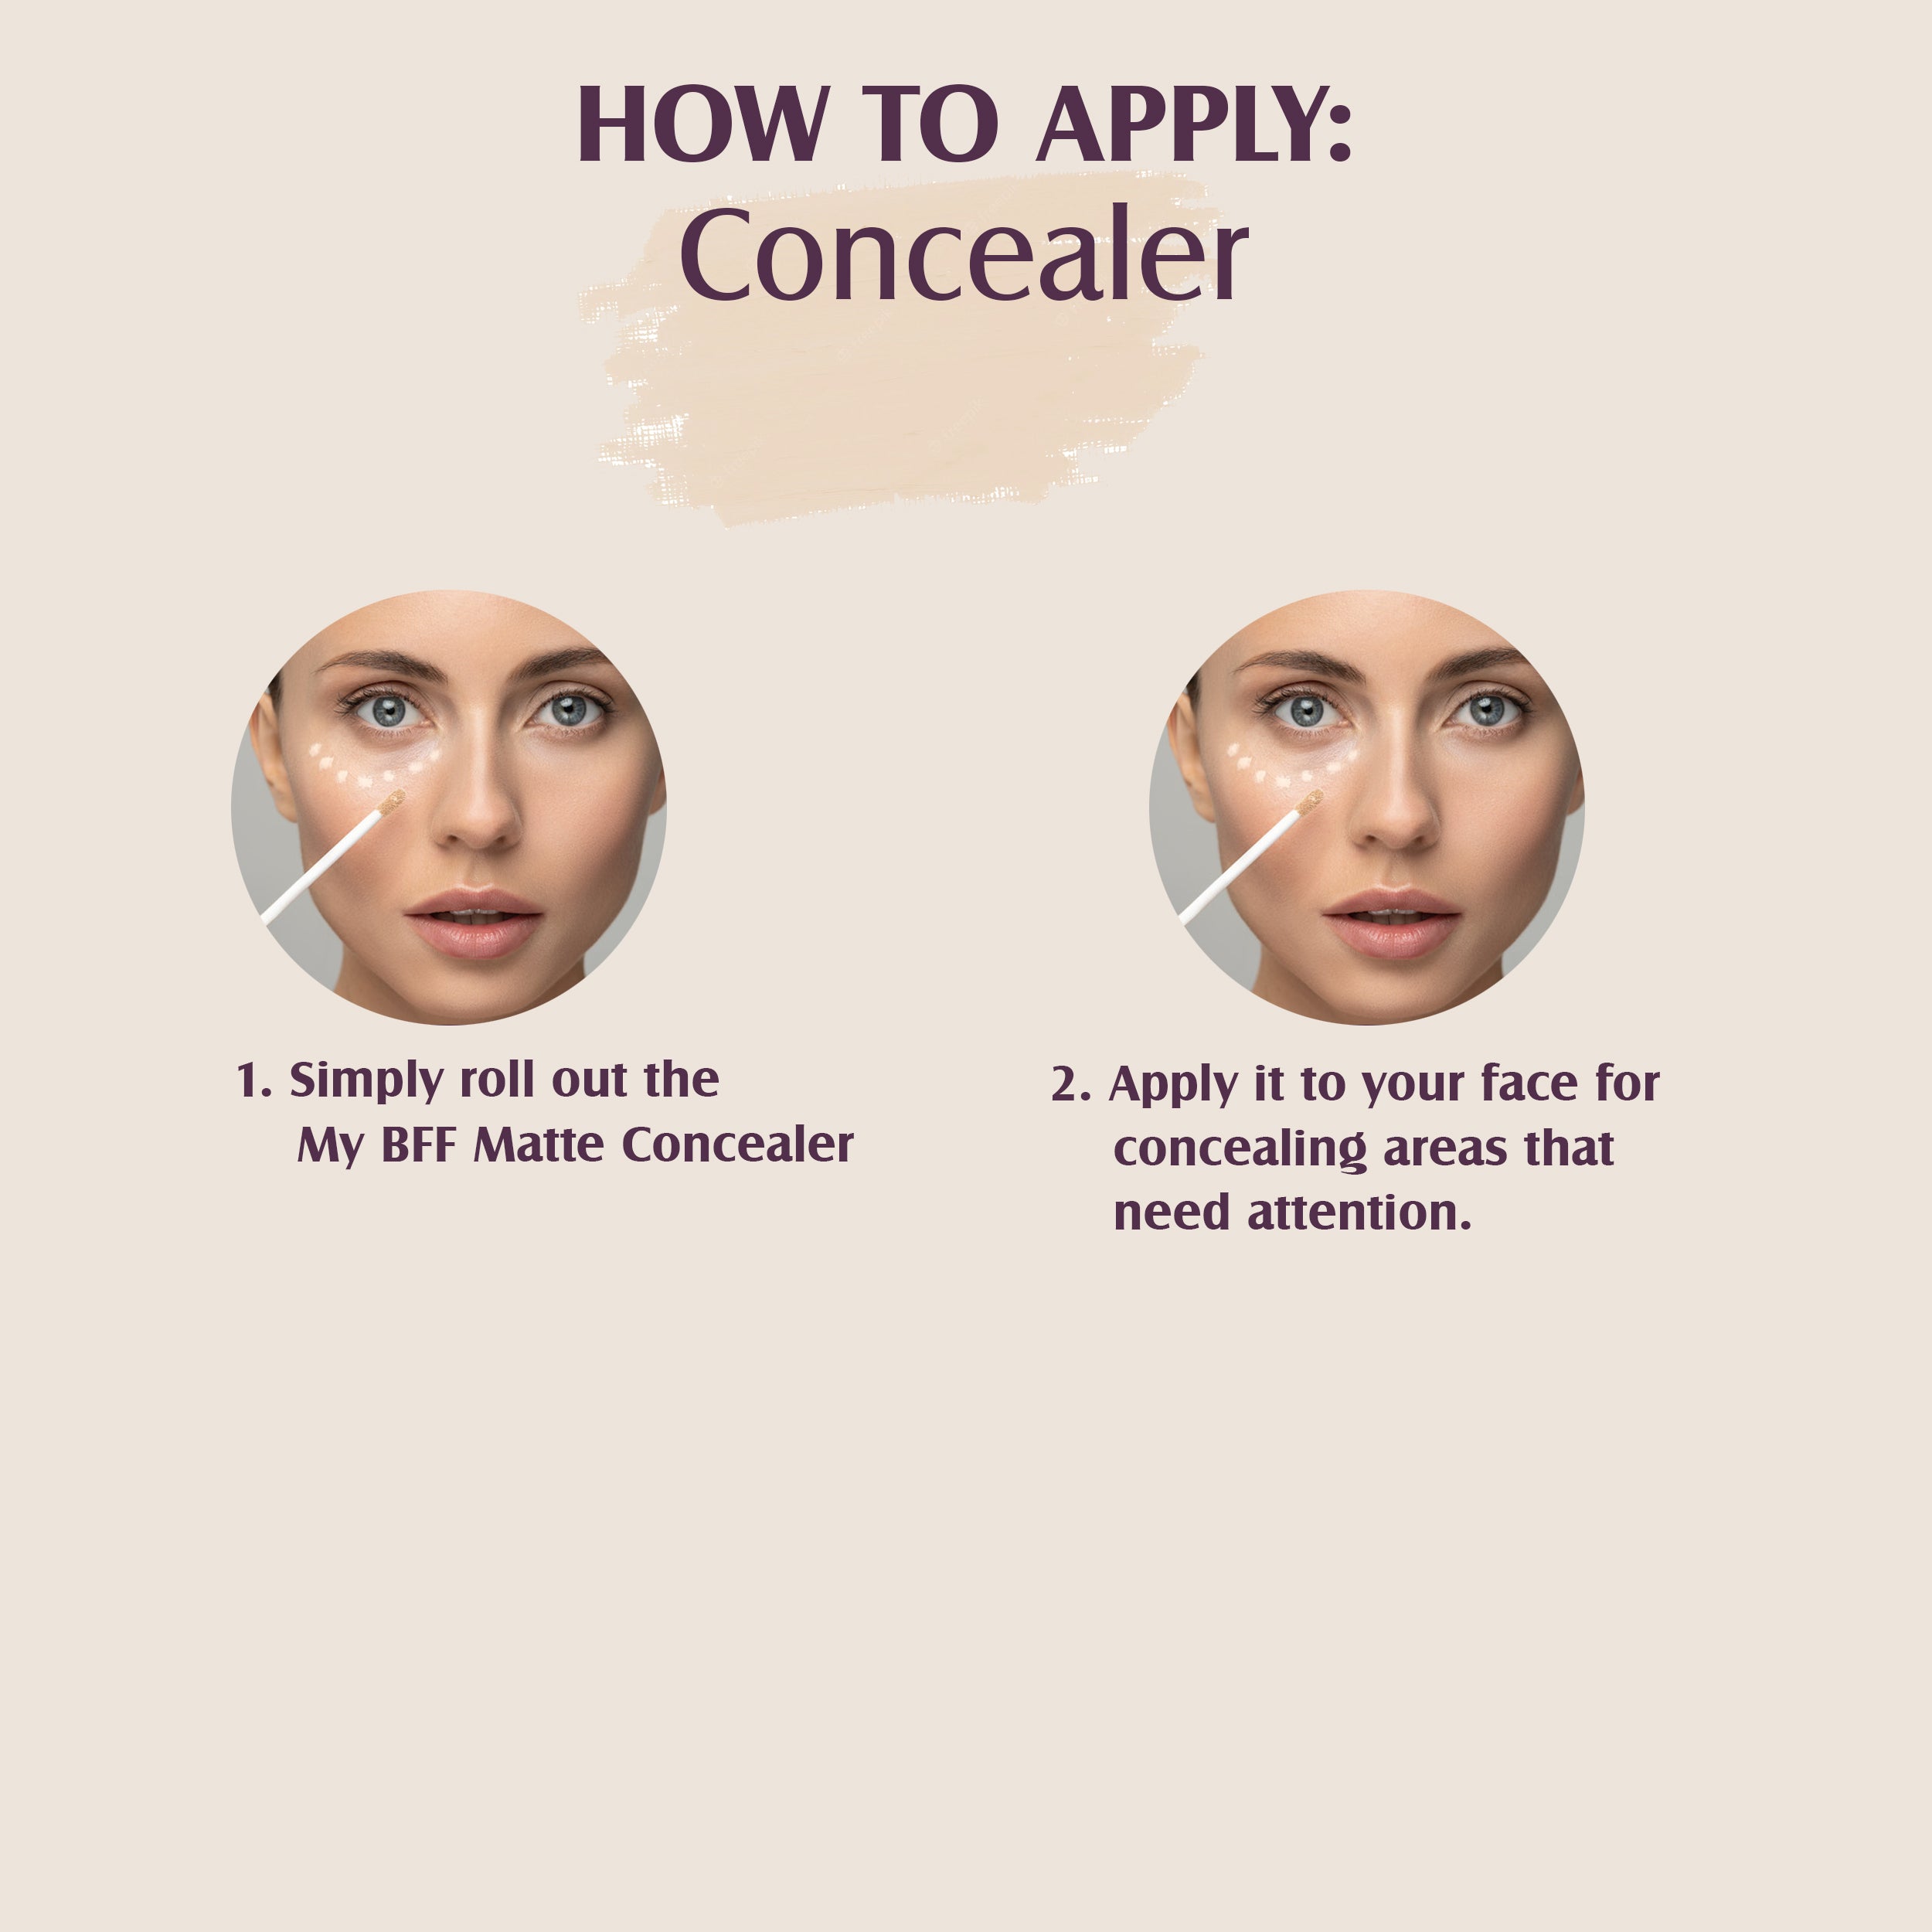 Glam21 My BFF Matte Liquid Concealer-Conceal,Contour,&Highlights Your Face|Matte Finish Concealer (Medium Olive, 8 g)